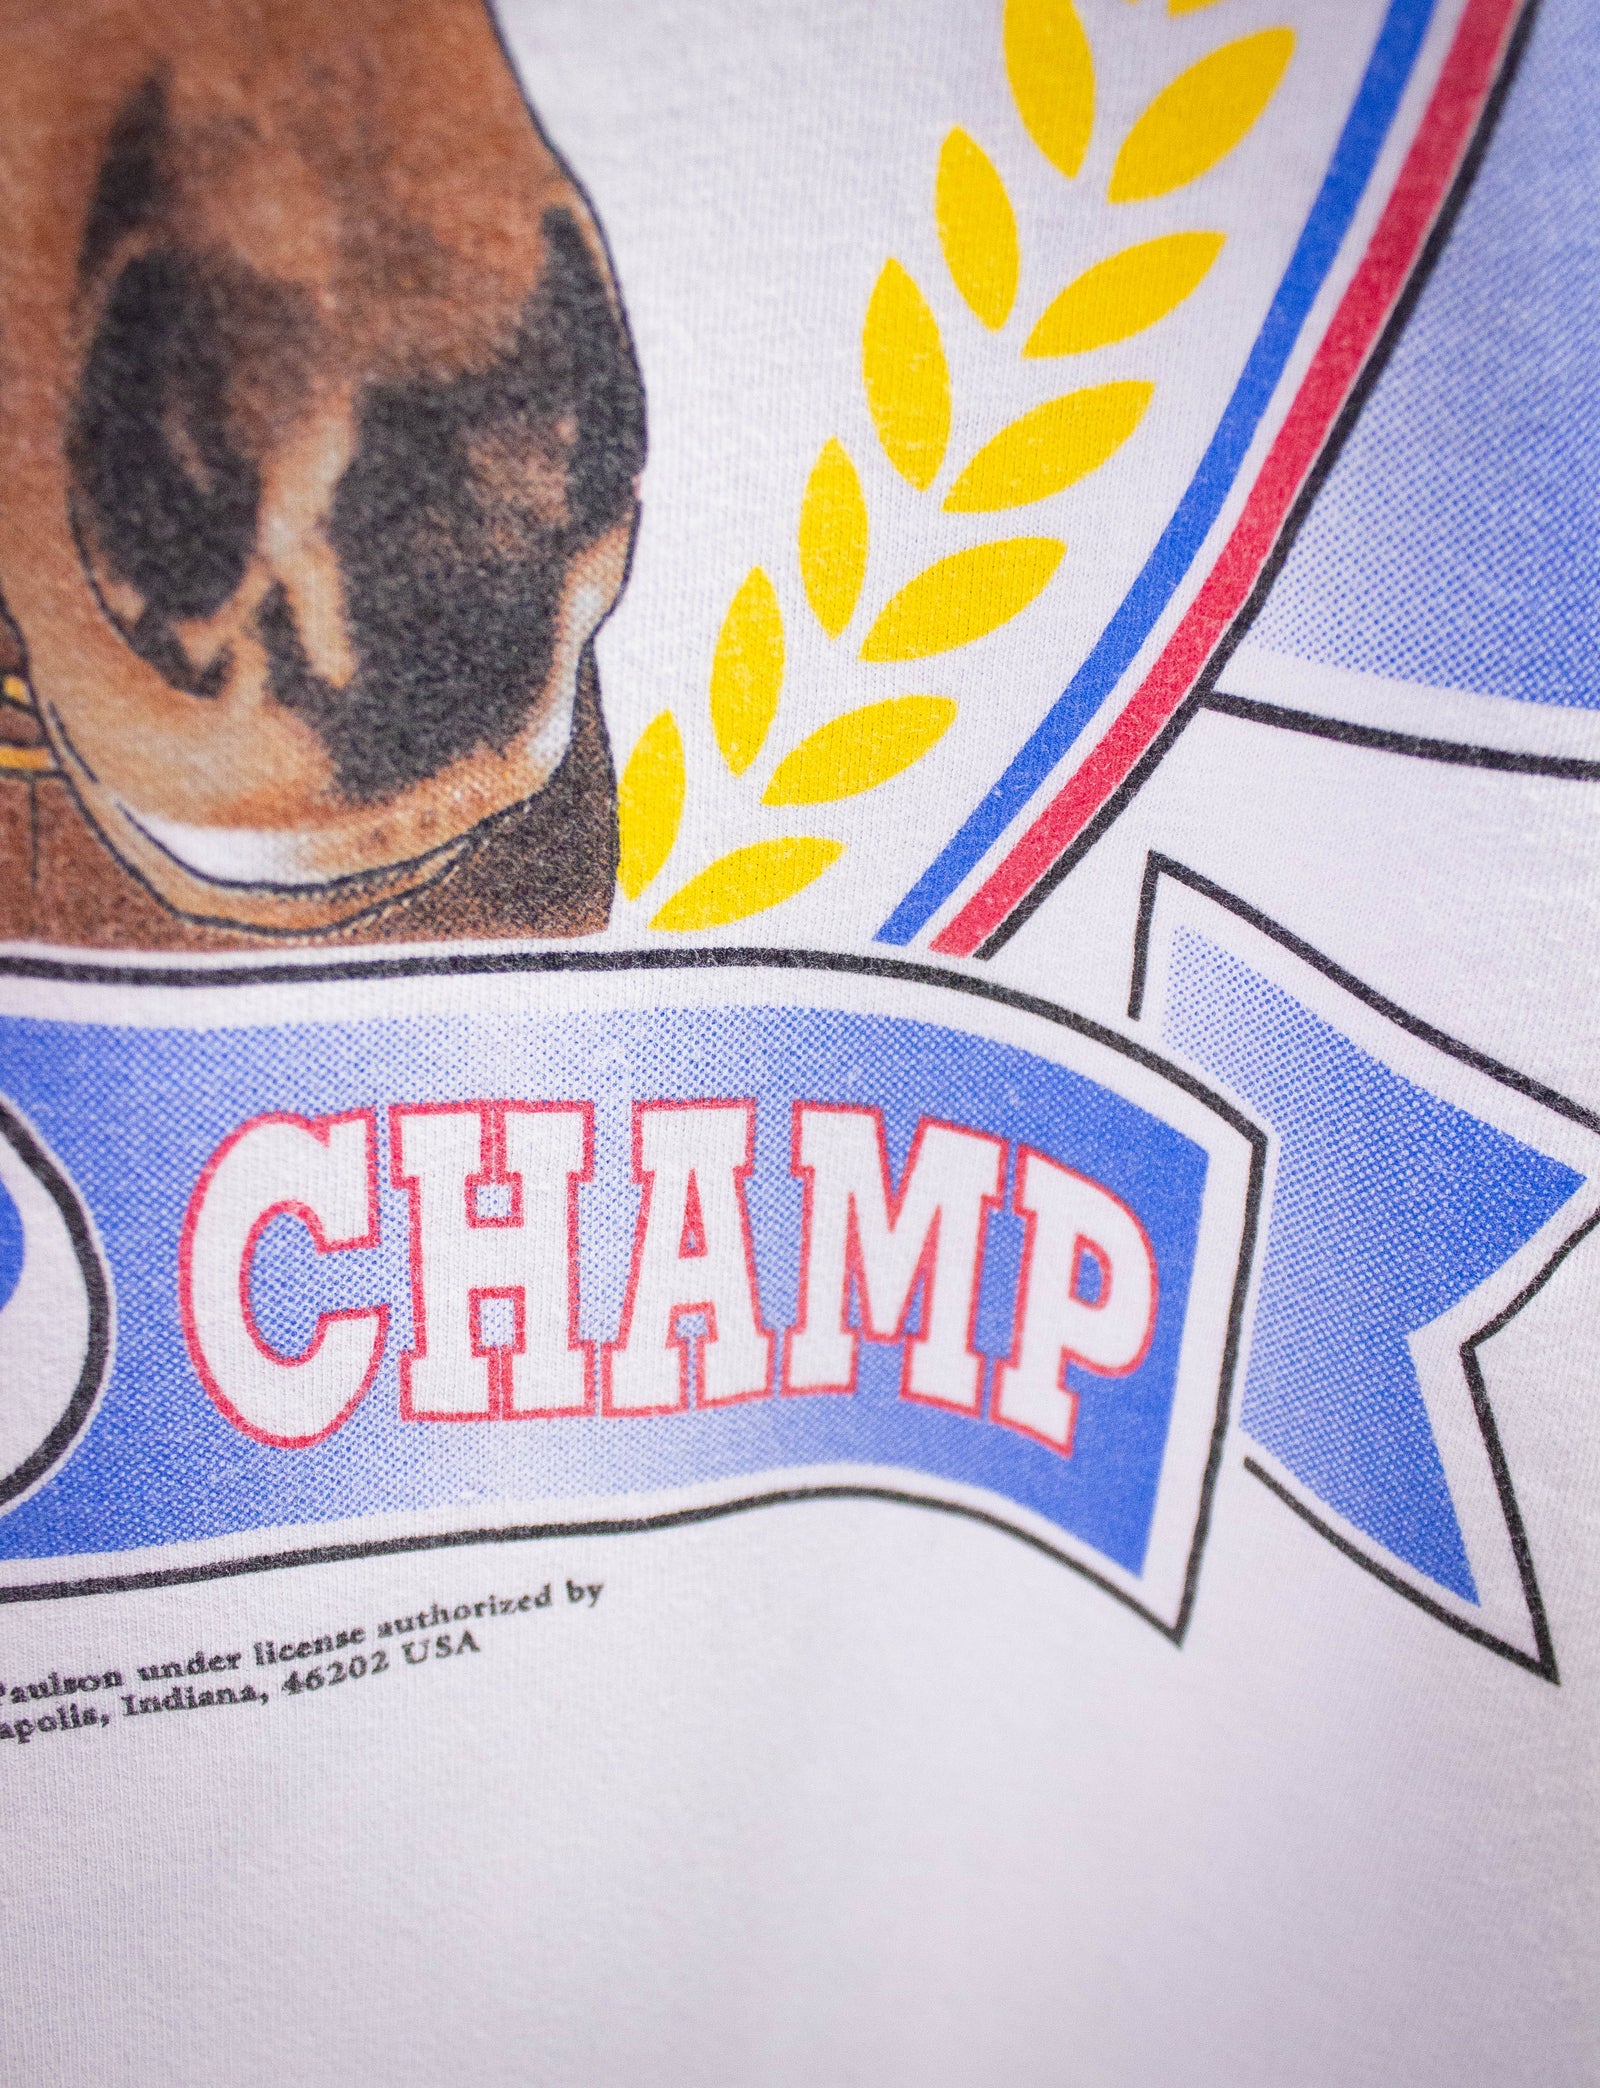 Vintage Cigar Horse Graphic T-Shirt 1996 XL